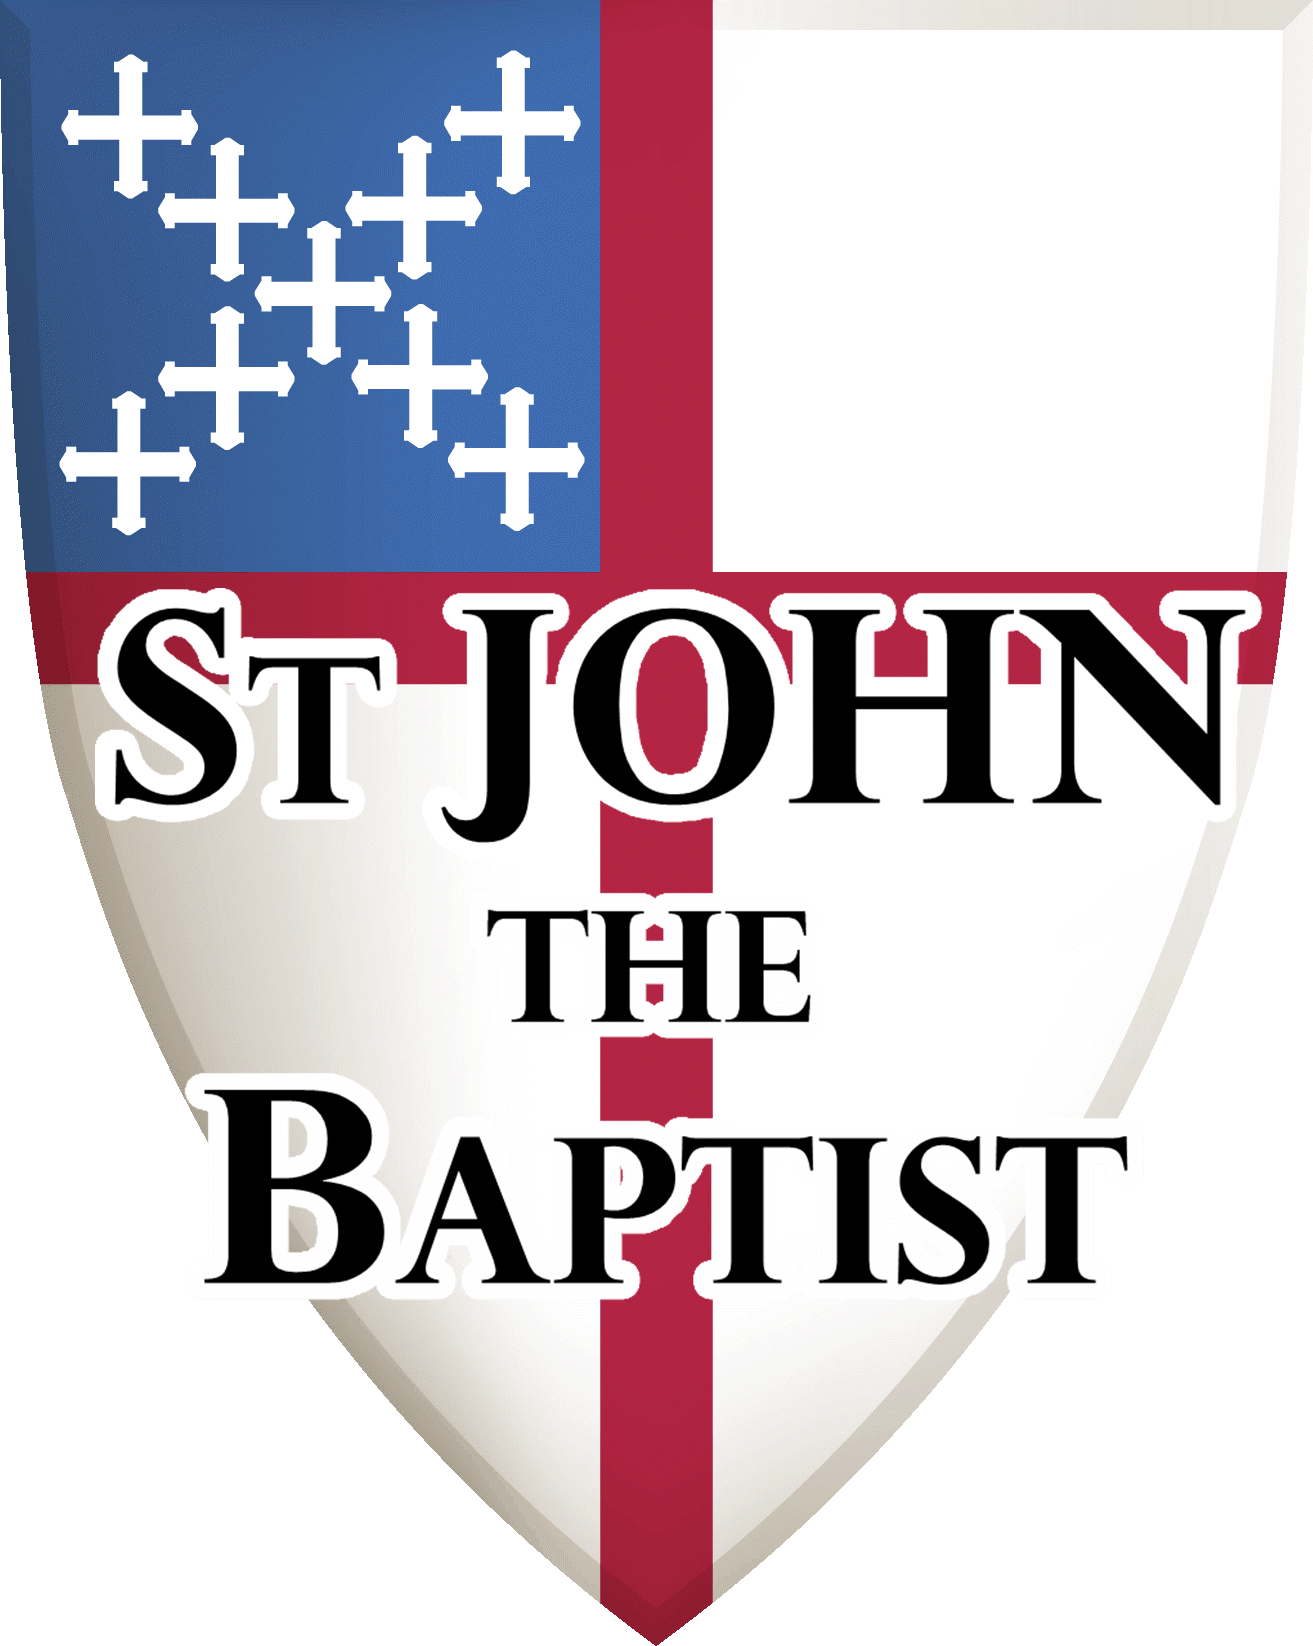 The Episcopal Church of St. John the Baptist in Linden, NJ